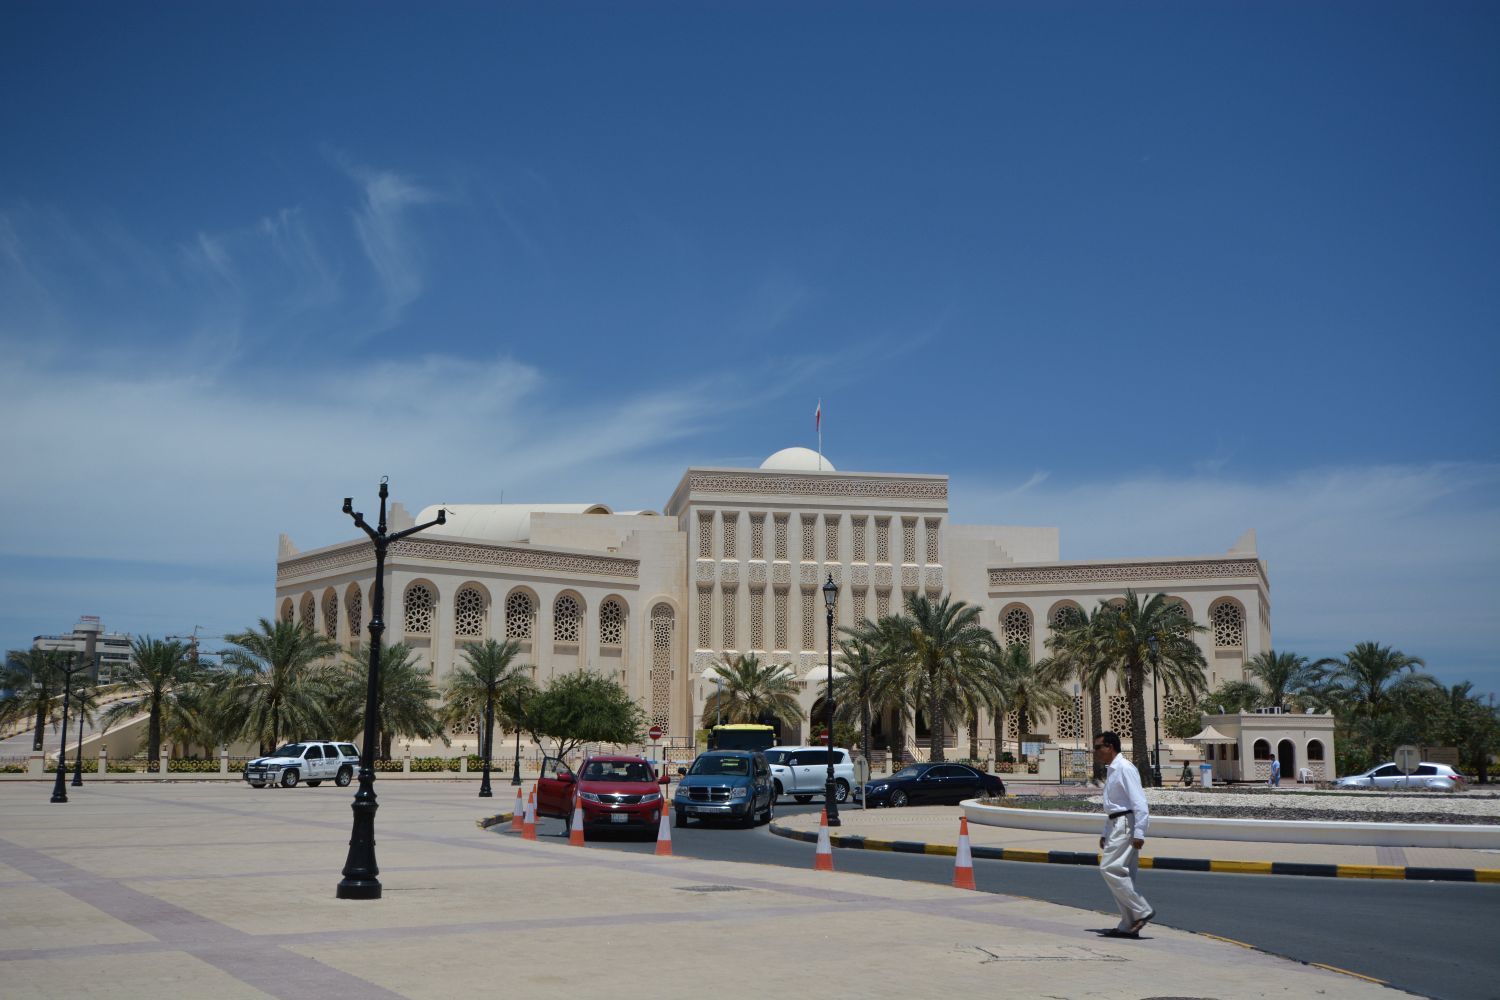 Al Fateh Grand Mosque - Exterior view of the Al-Fatih Mosque in Manama, Bahrain.